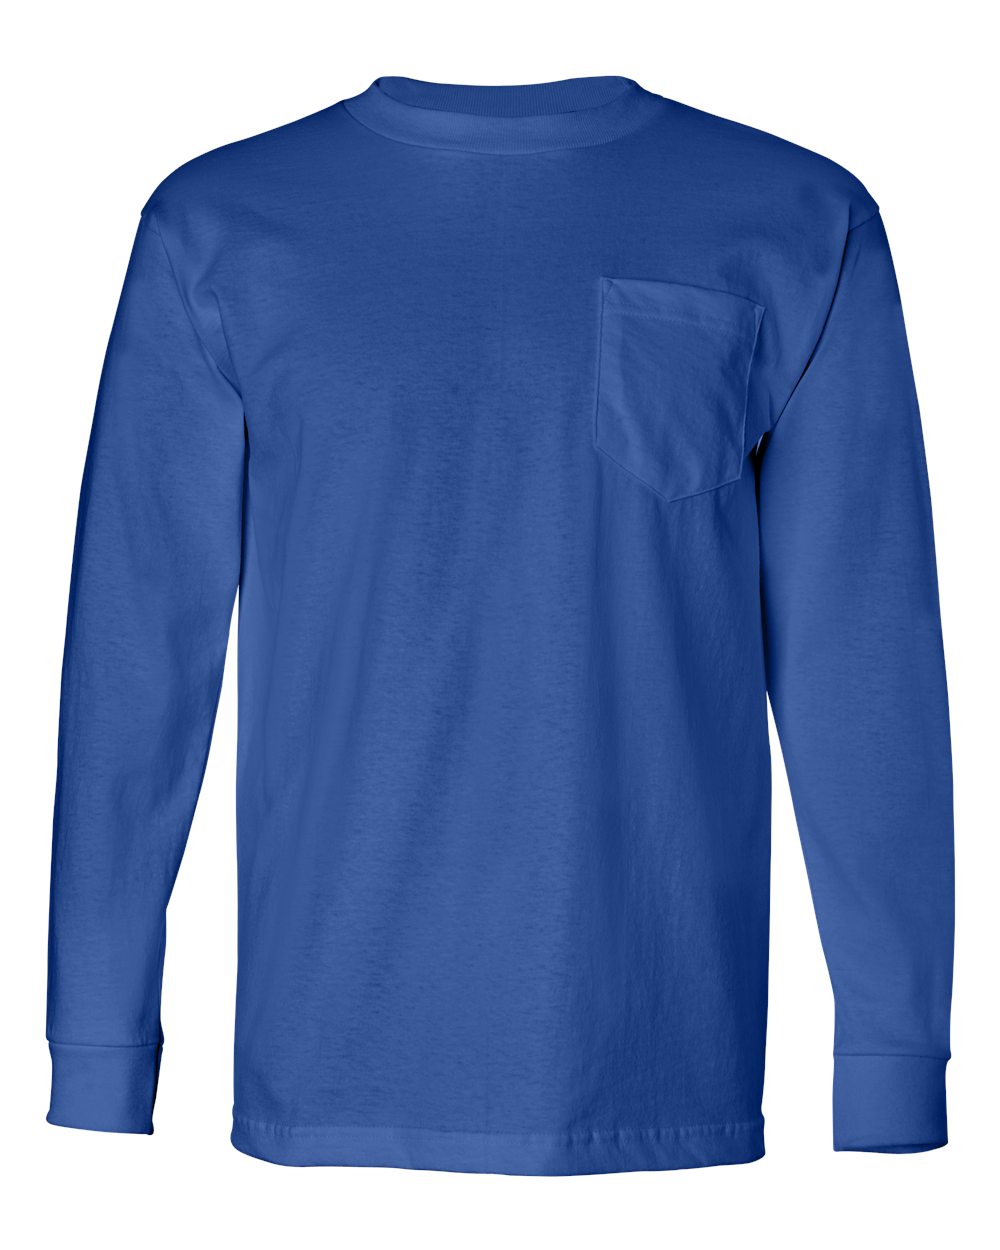 2XL Bayside Apparel Unisex Fine Jersey Long Sleeve Crewneck T-Shirt Navy